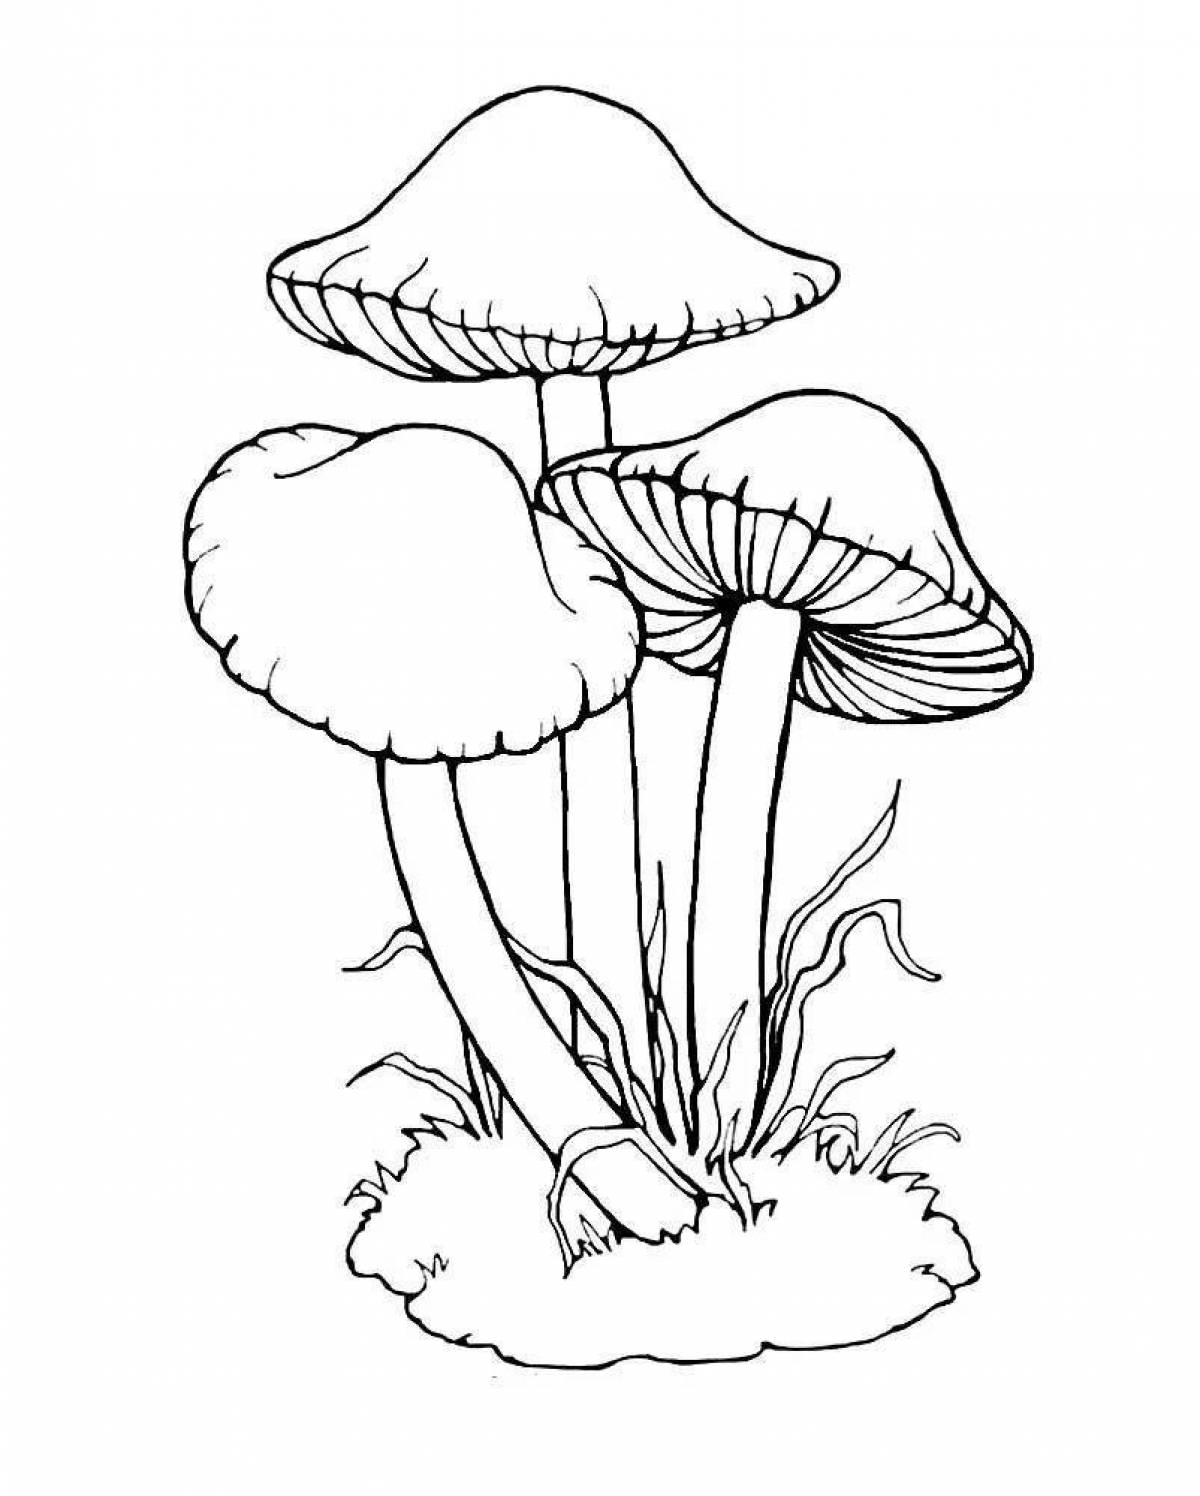 Multicolored inedible mushrooms